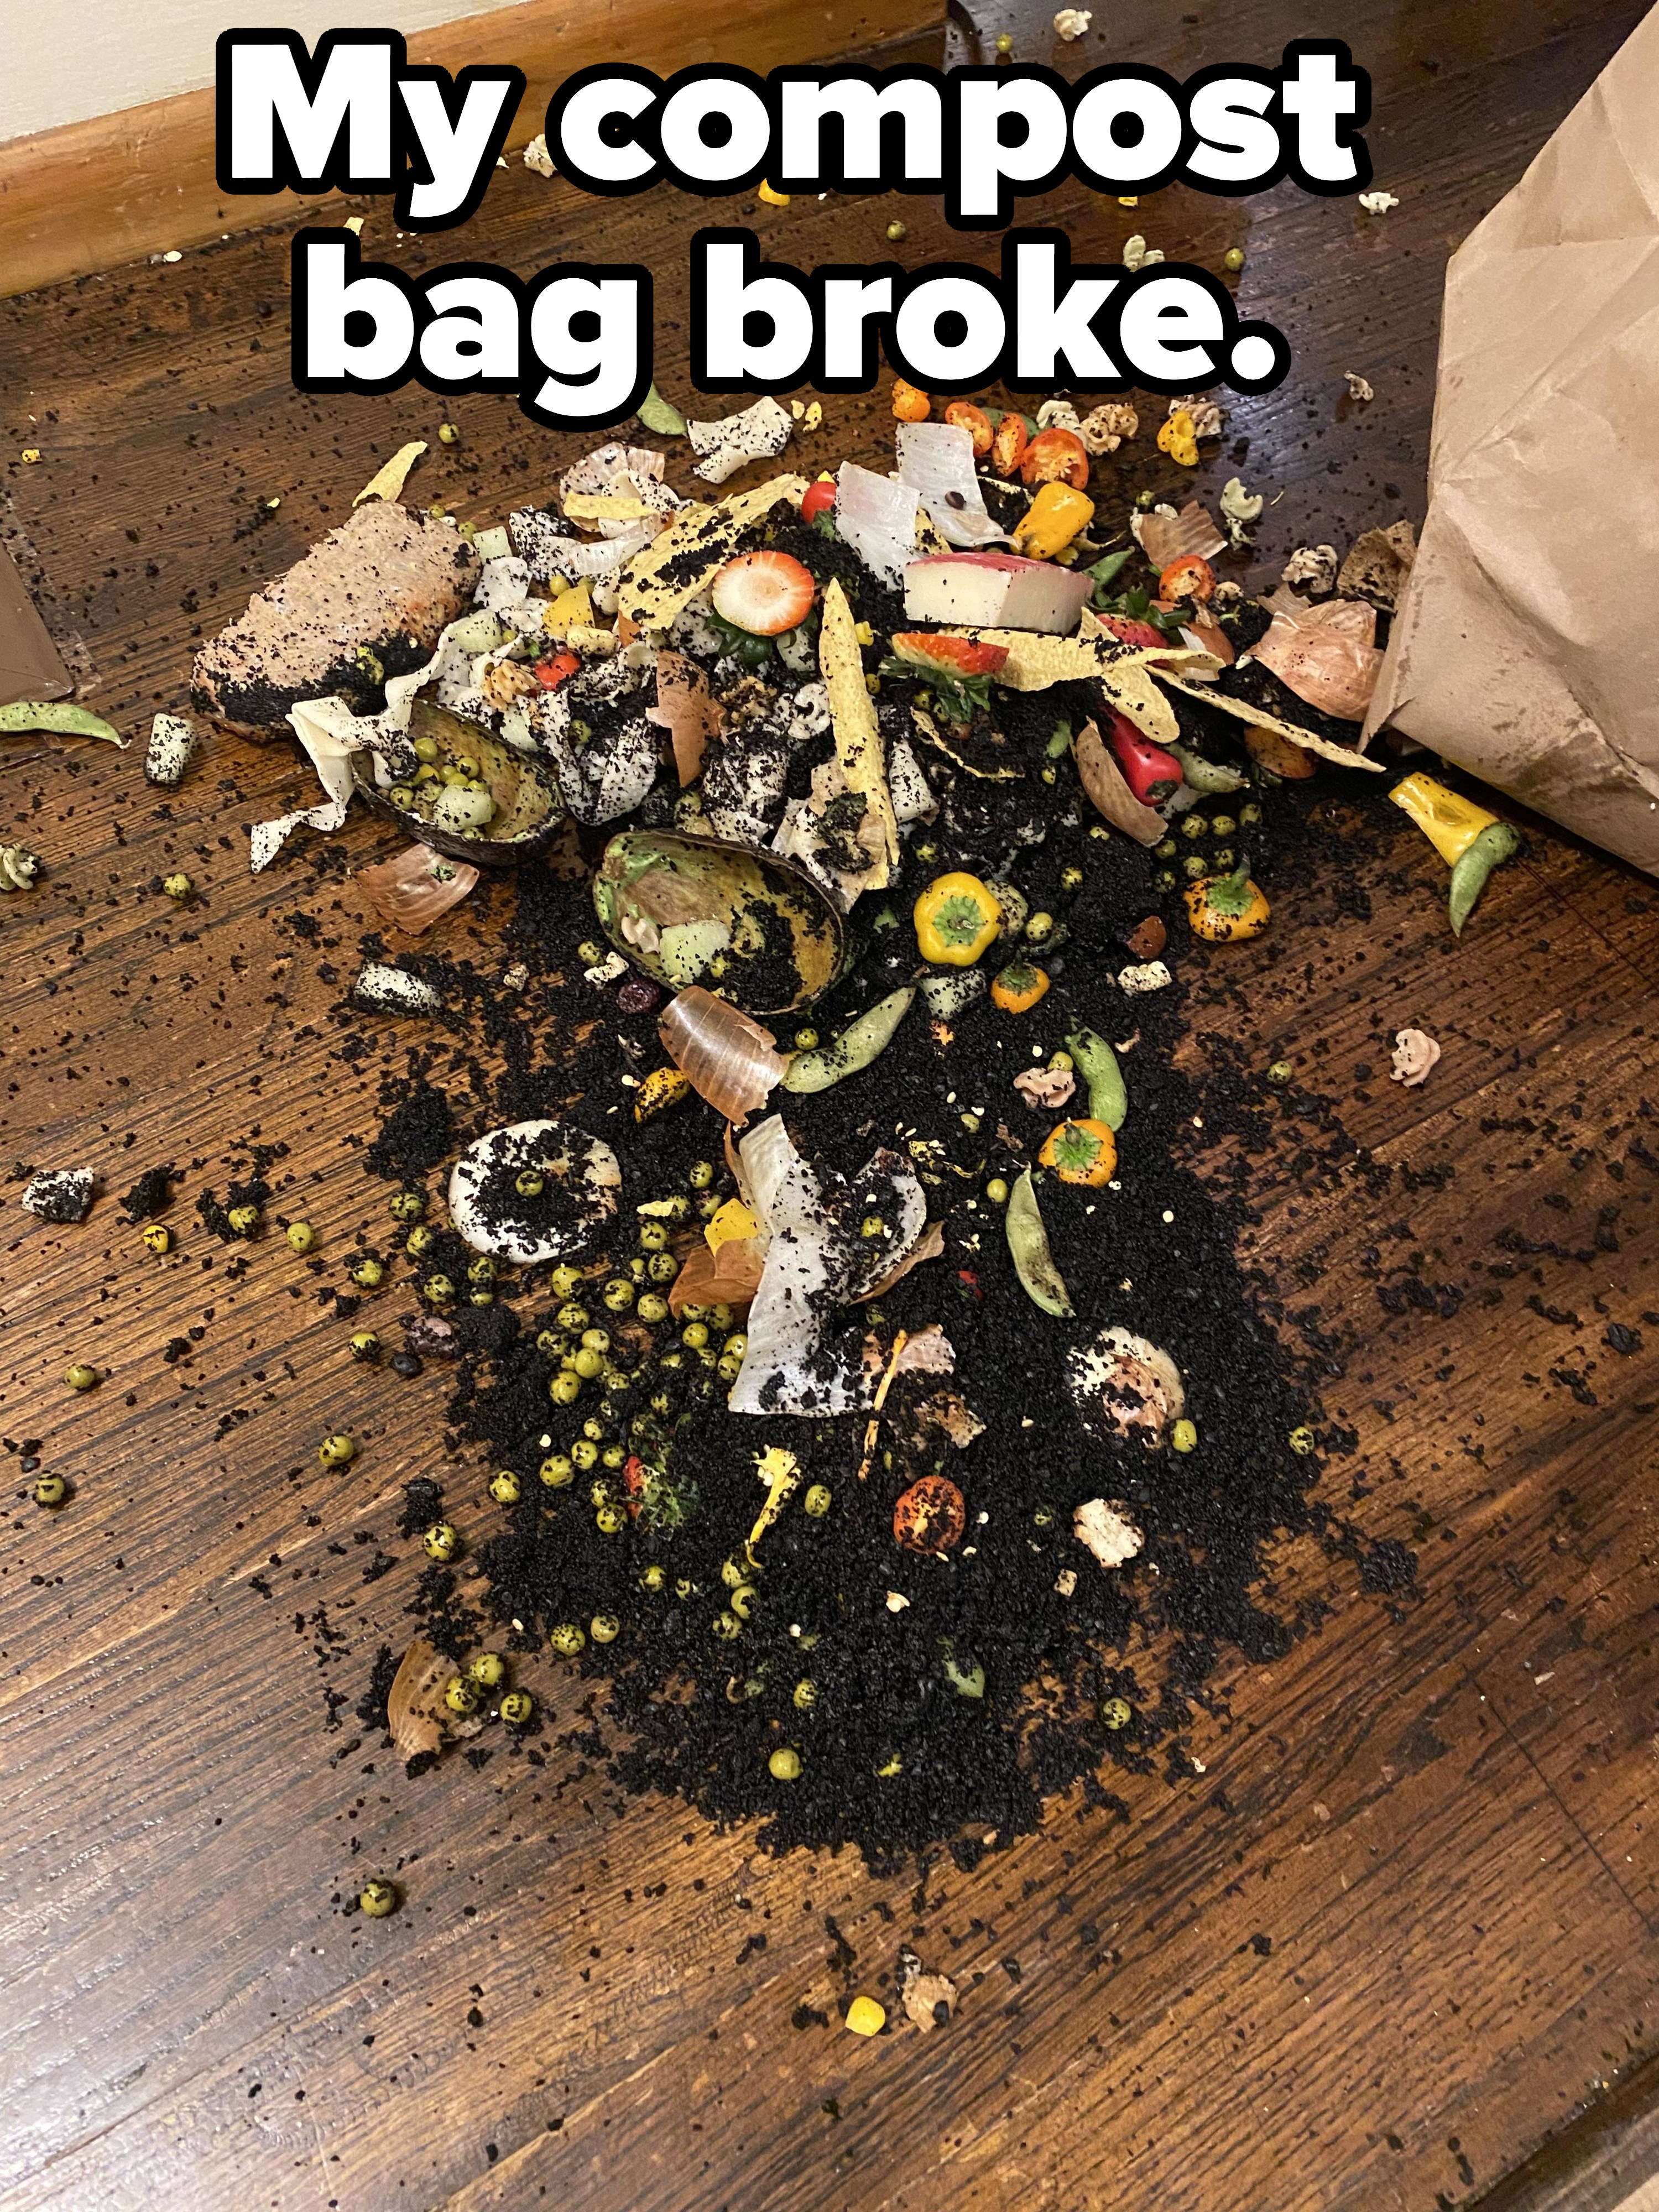 Contents of broken compost bag all over the wood floor